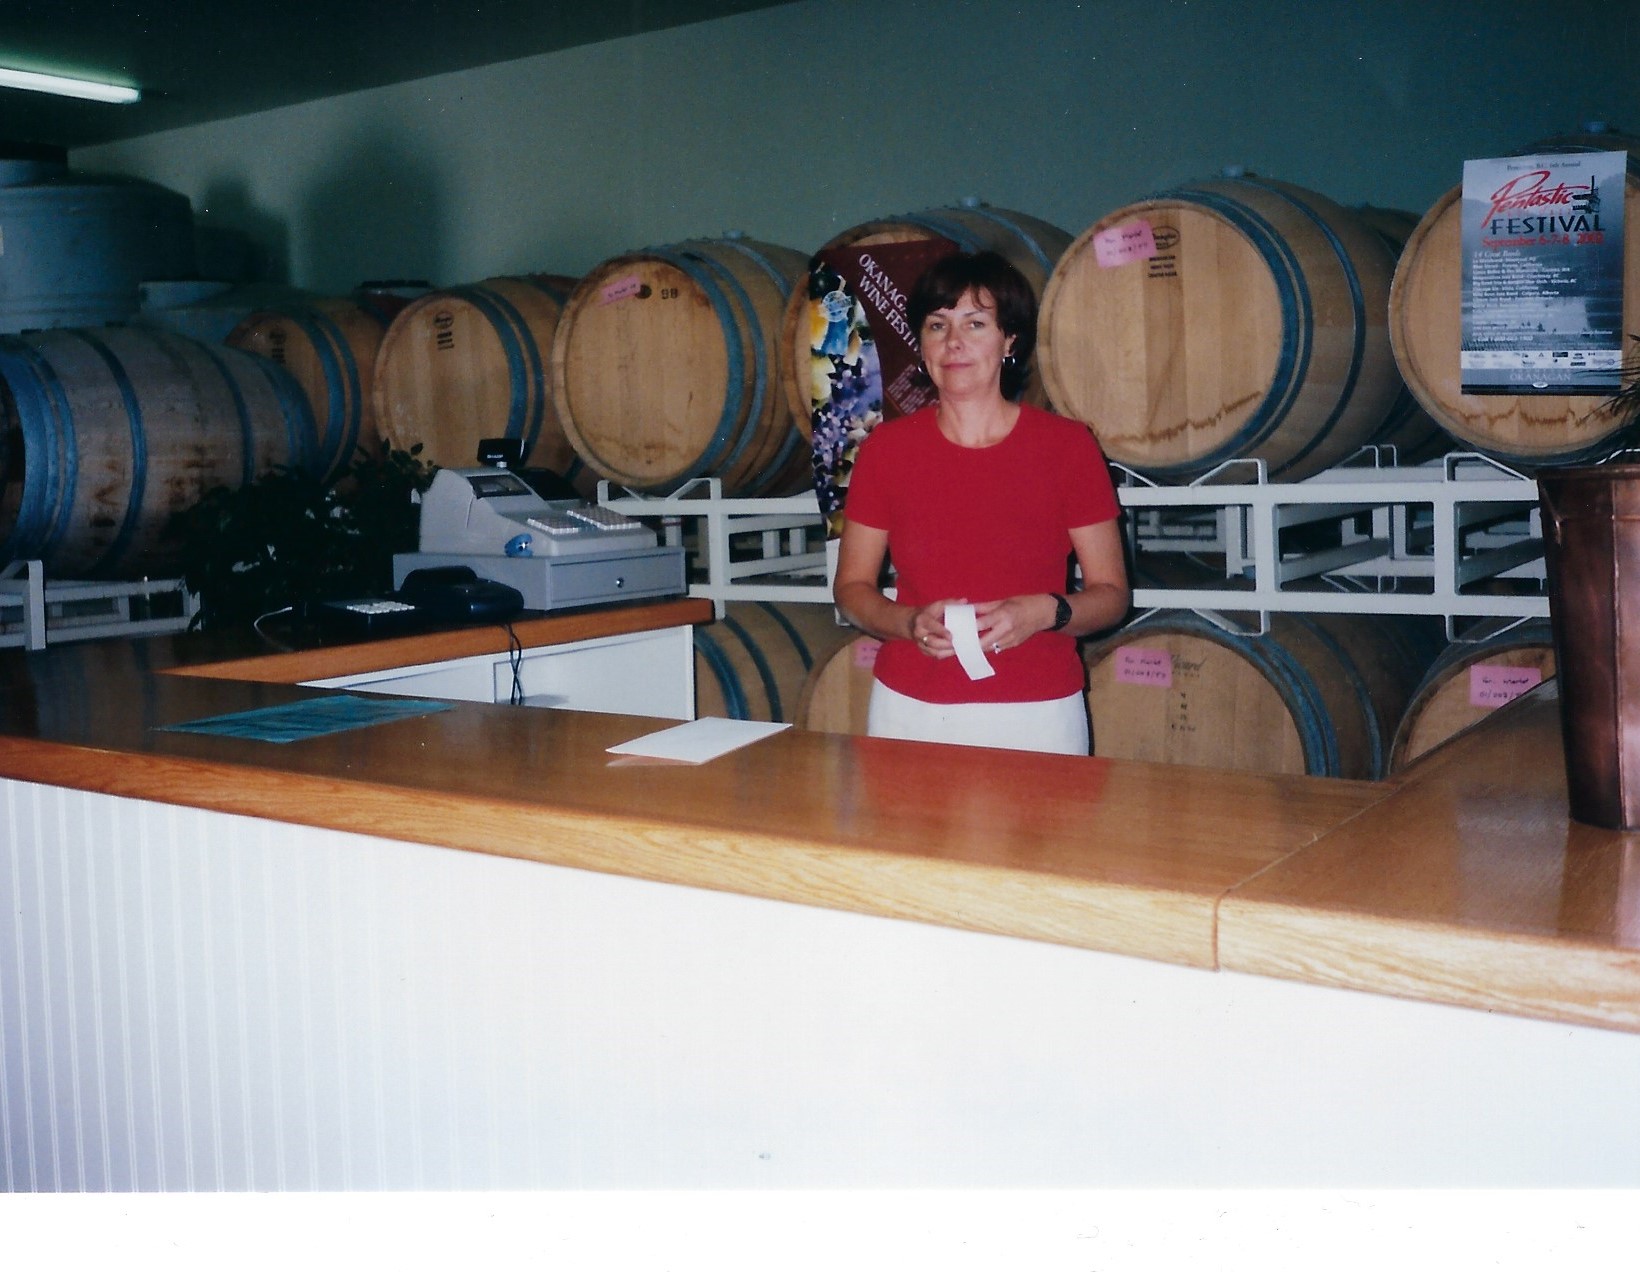 Niva Martin standing in front of wine barrels in the LA FRENZ tasting room.